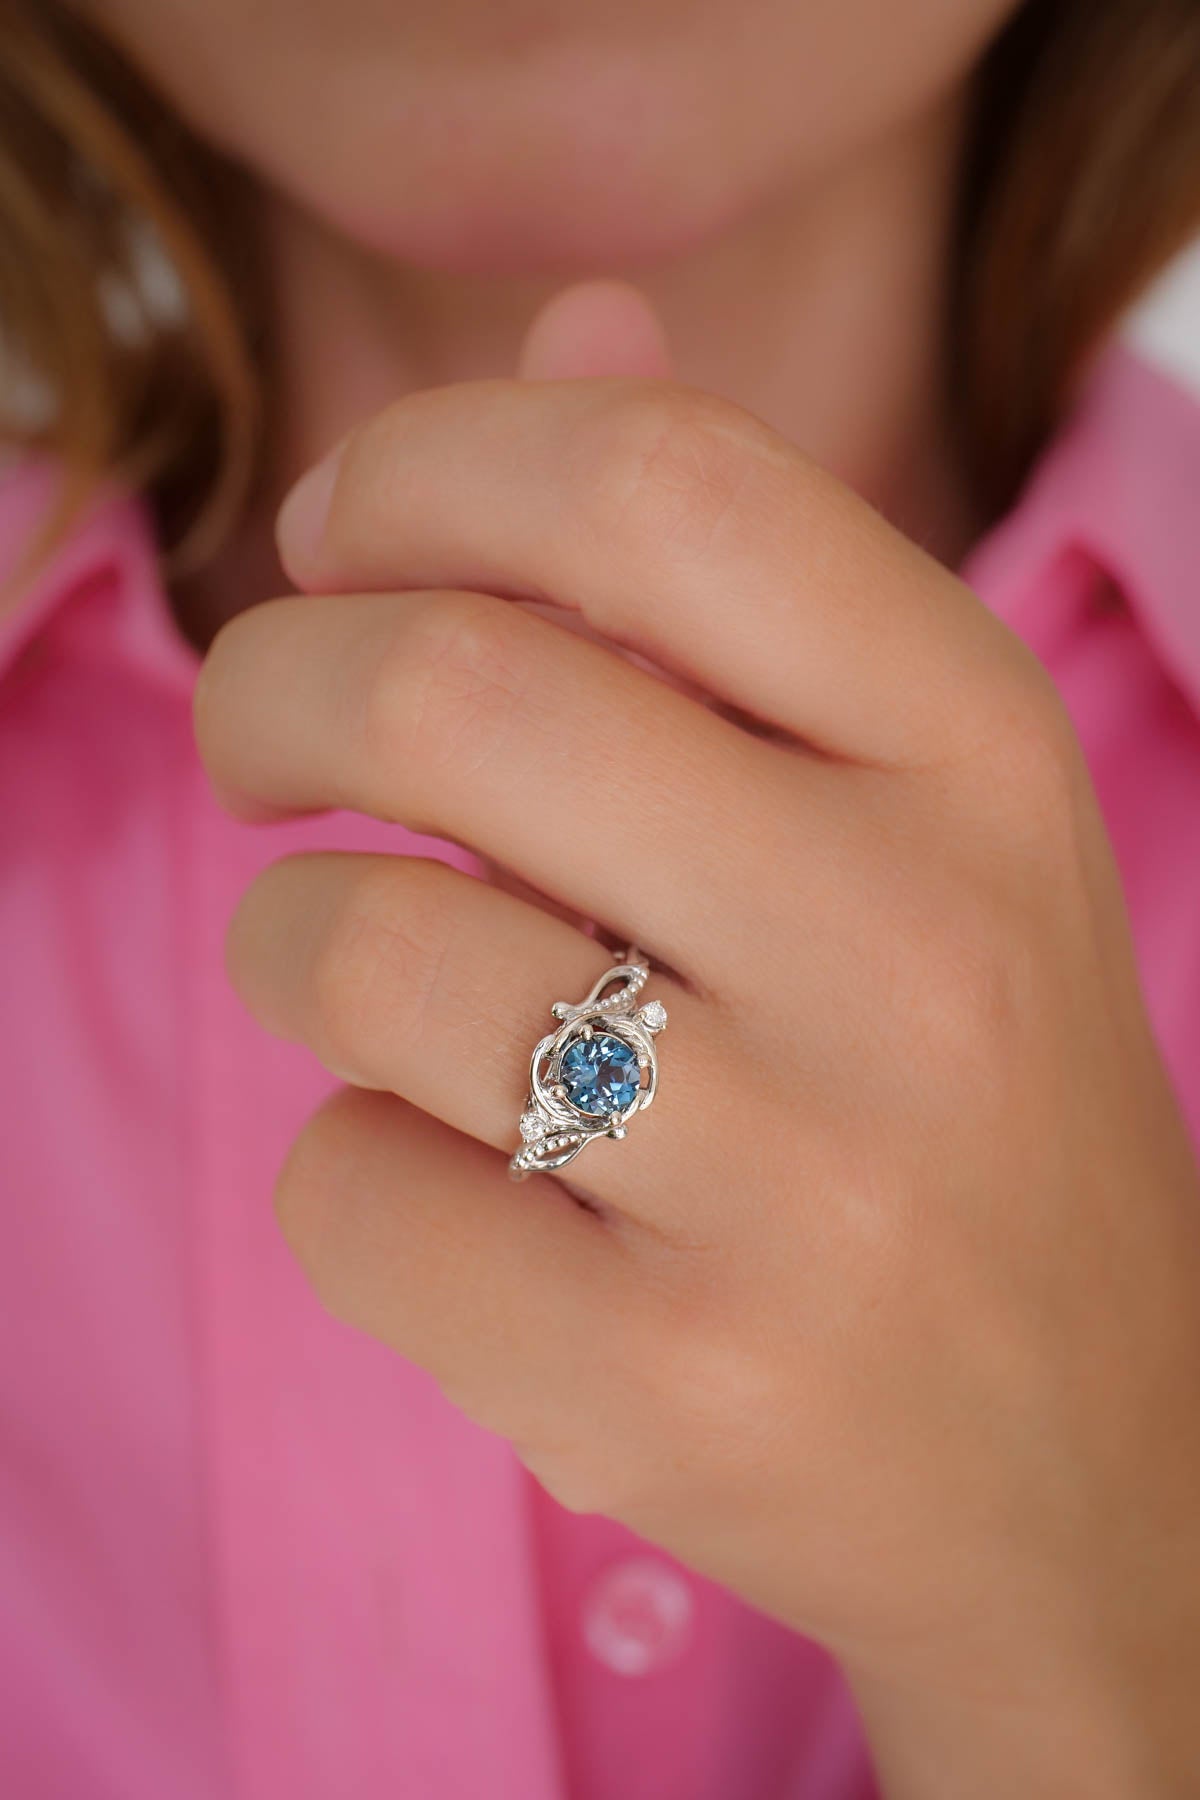 London blue topaz engagement ring in rose gold / Adonis | Eden Garden  Jewelry™